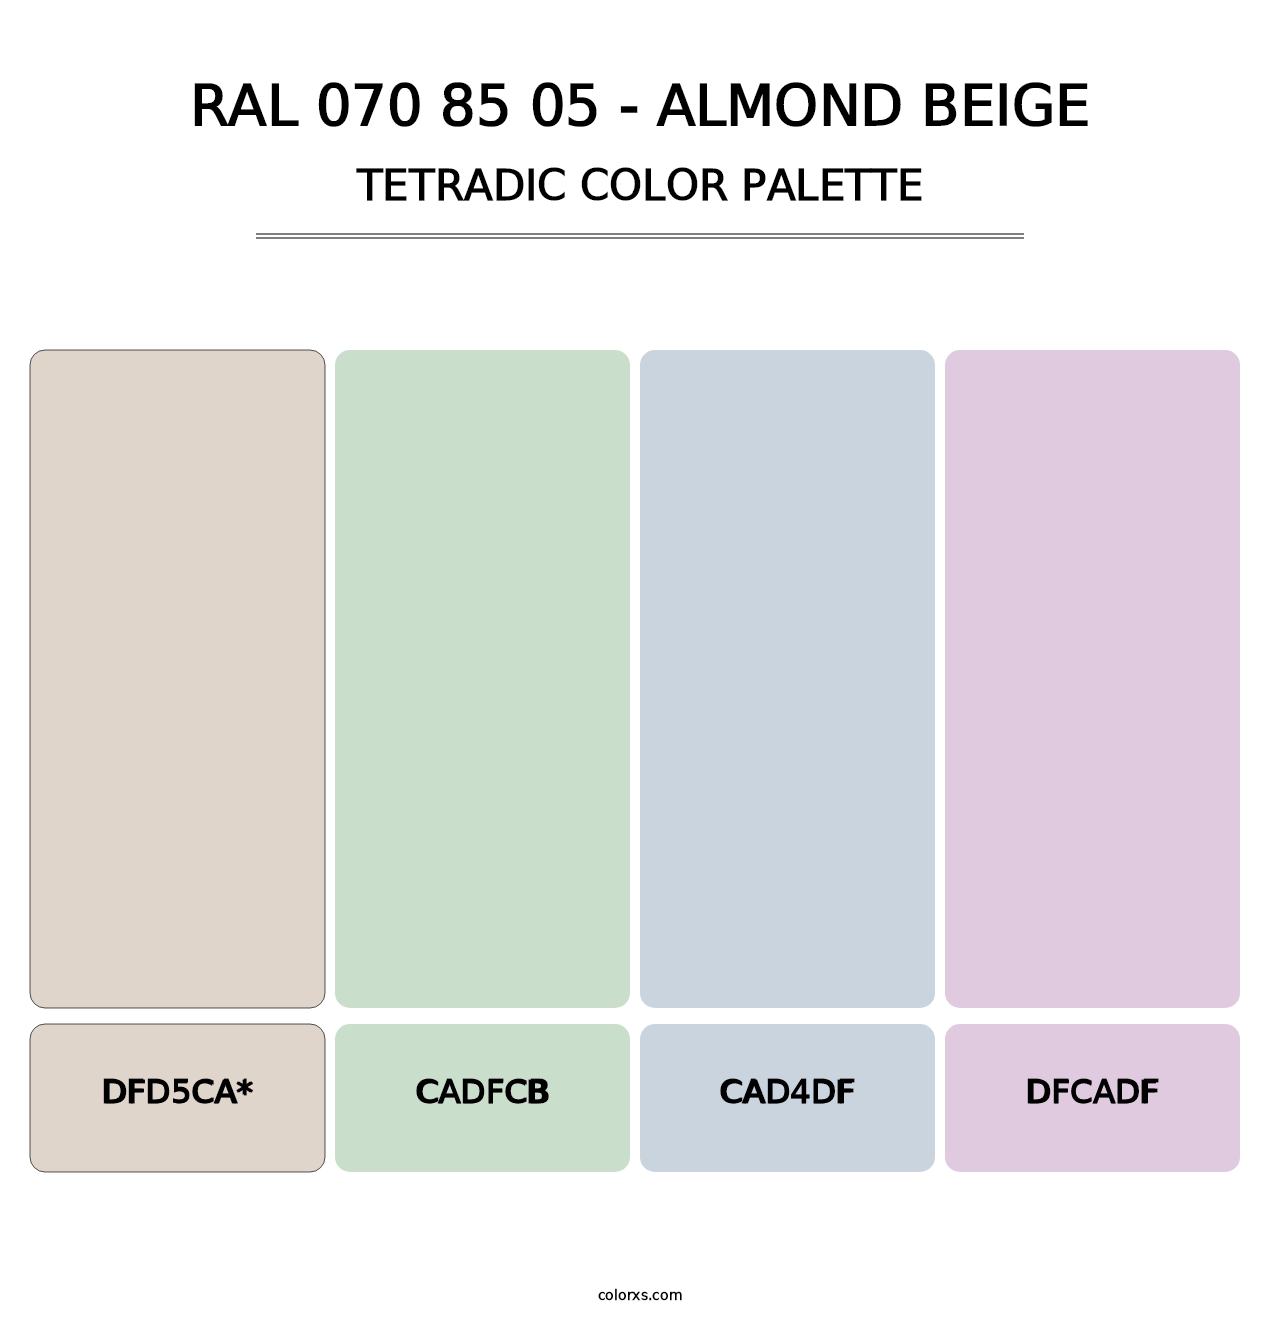 RAL 070 85 05 - Almond Beige - Tetradic Color Palette